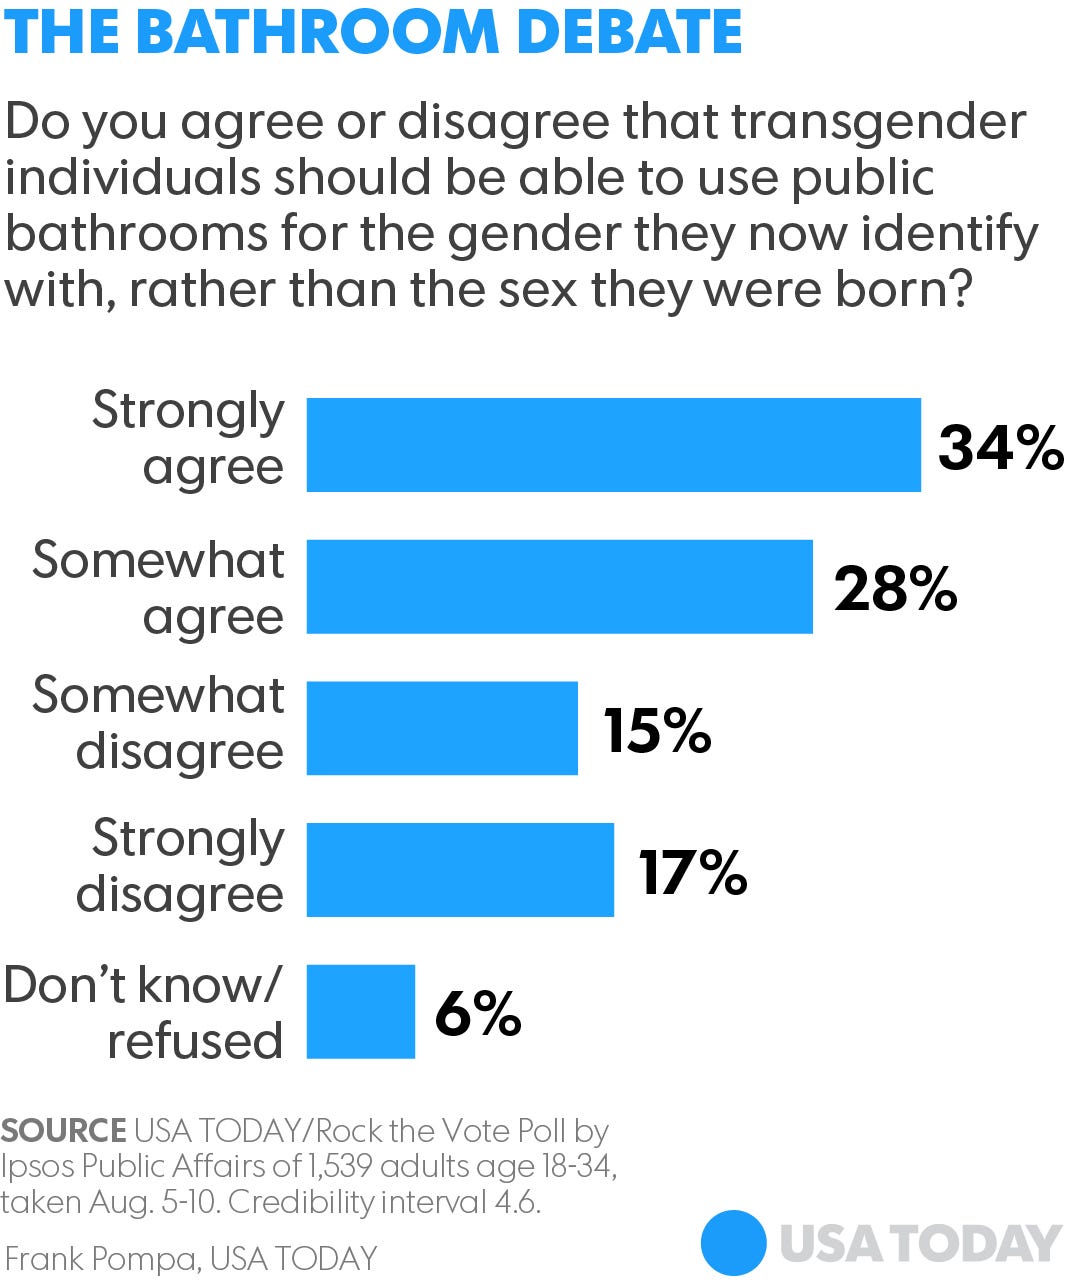 For Millennials, a consensus on transgender bathroom use